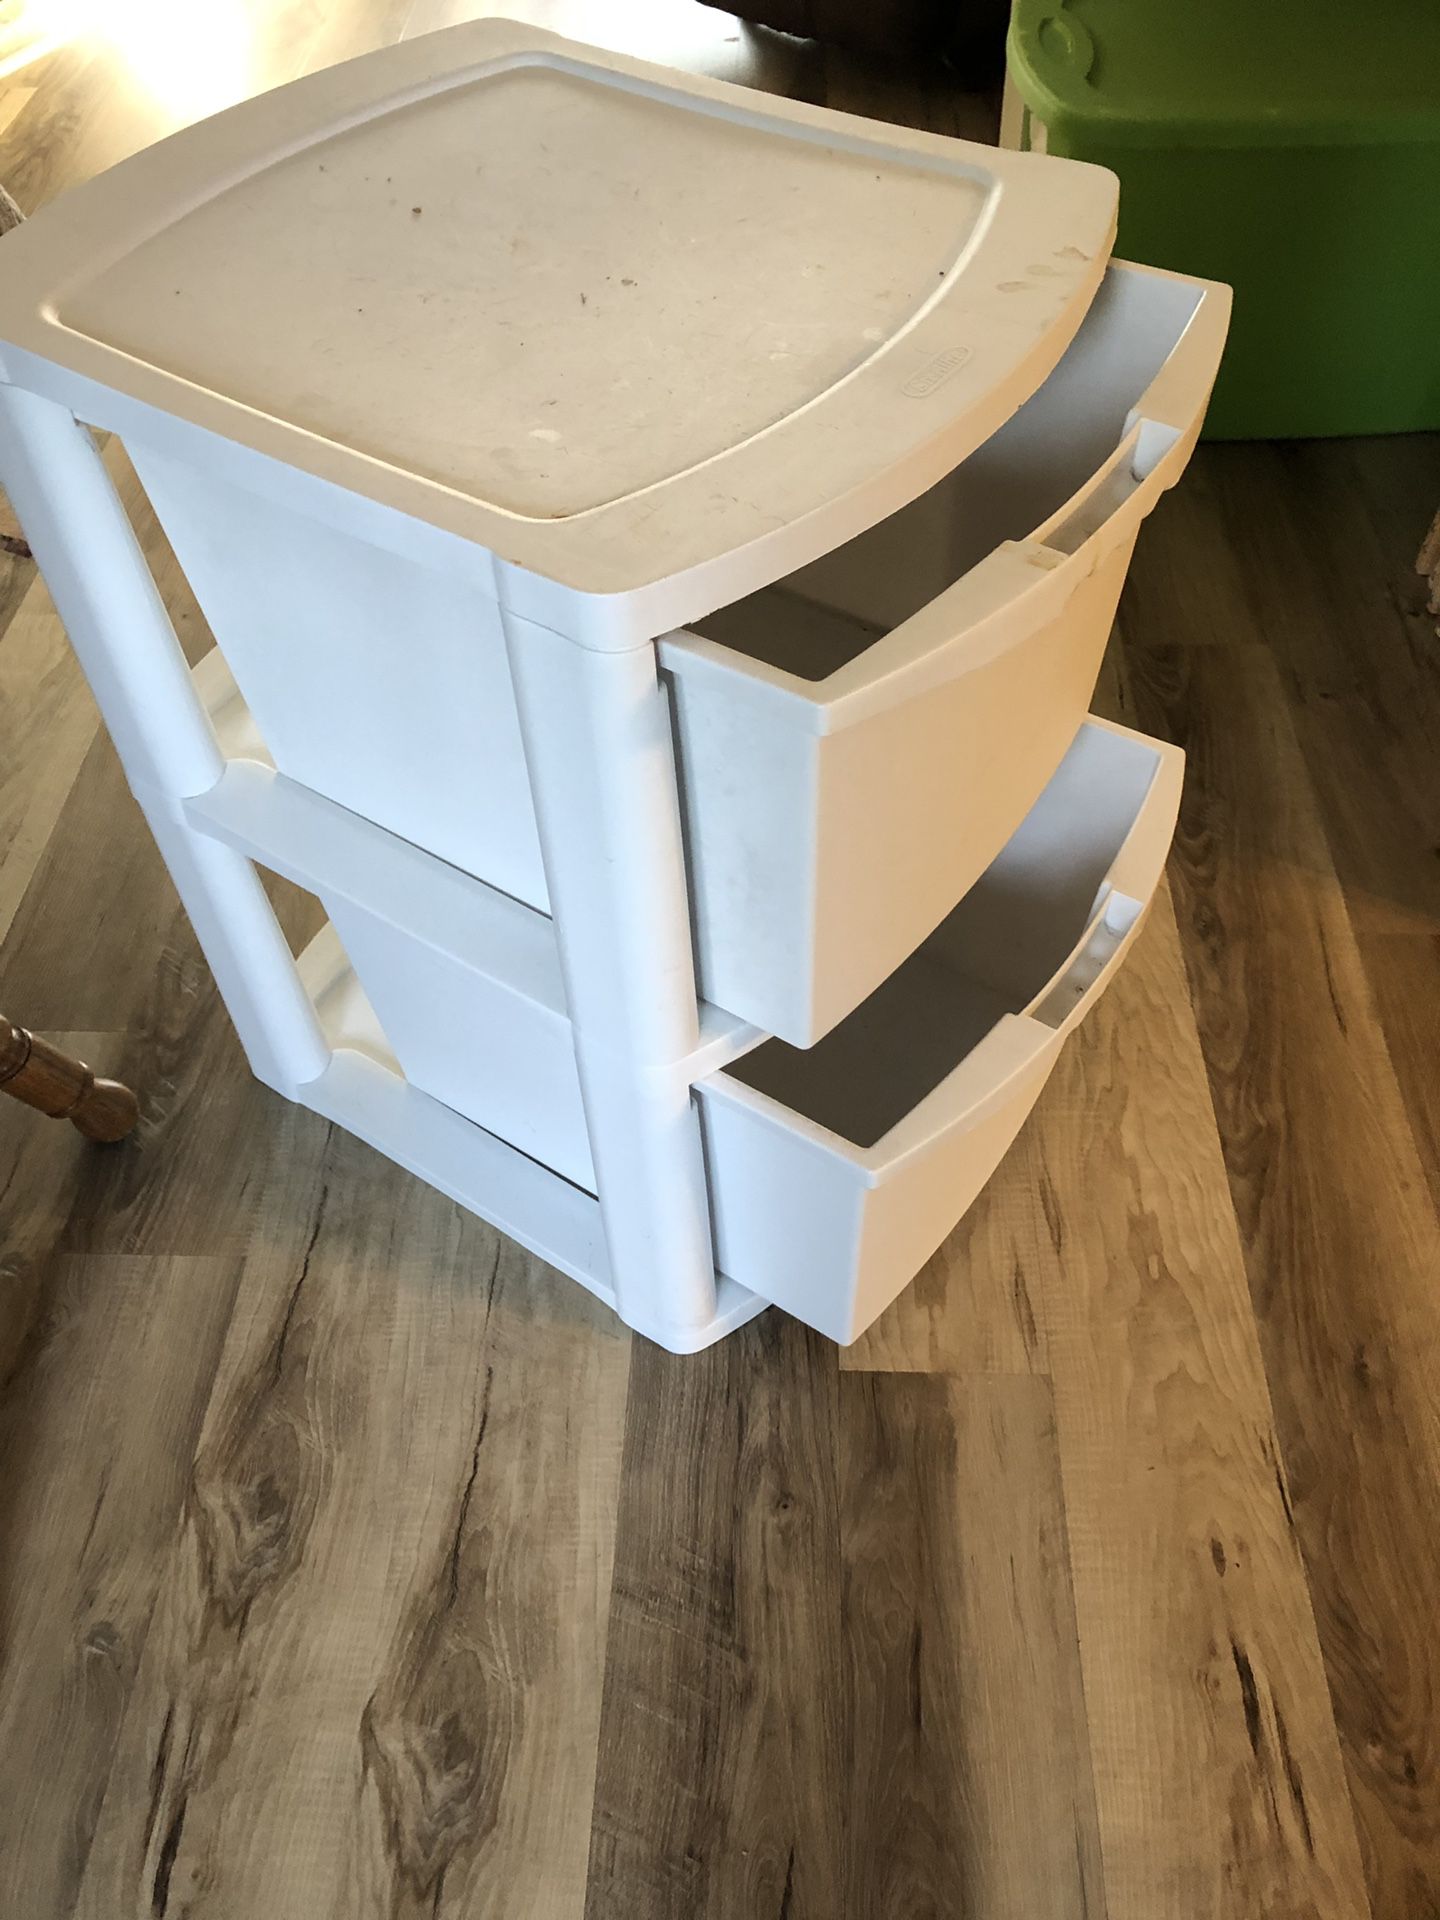 Large plastic bin. 2 drawers